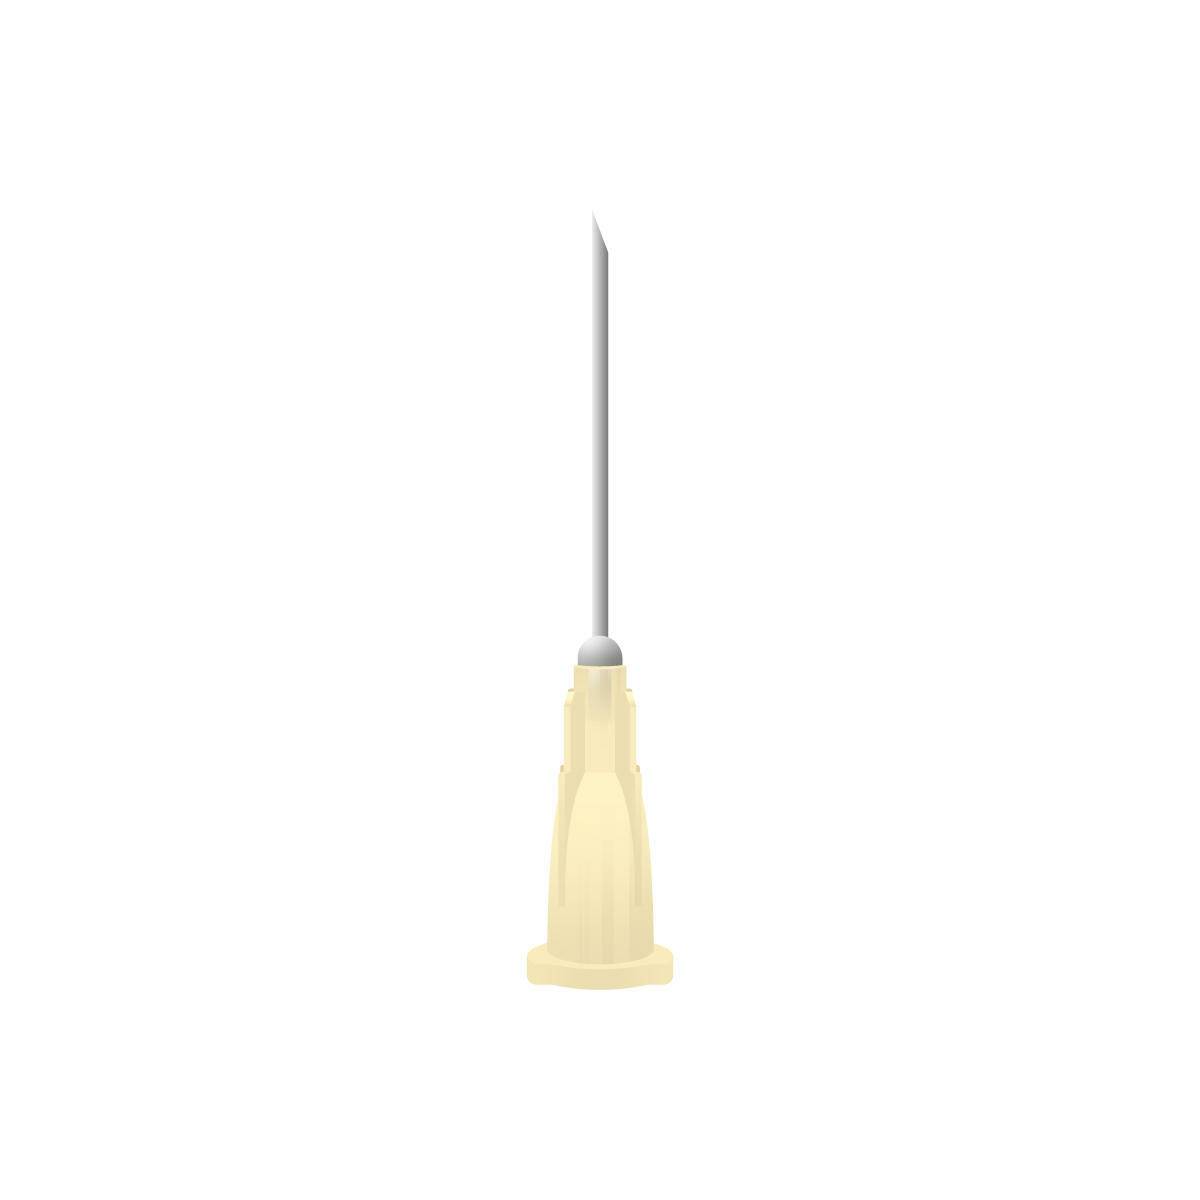 19g 1 inch Agriject Disposable Needles Poly Hub - UKMEDI